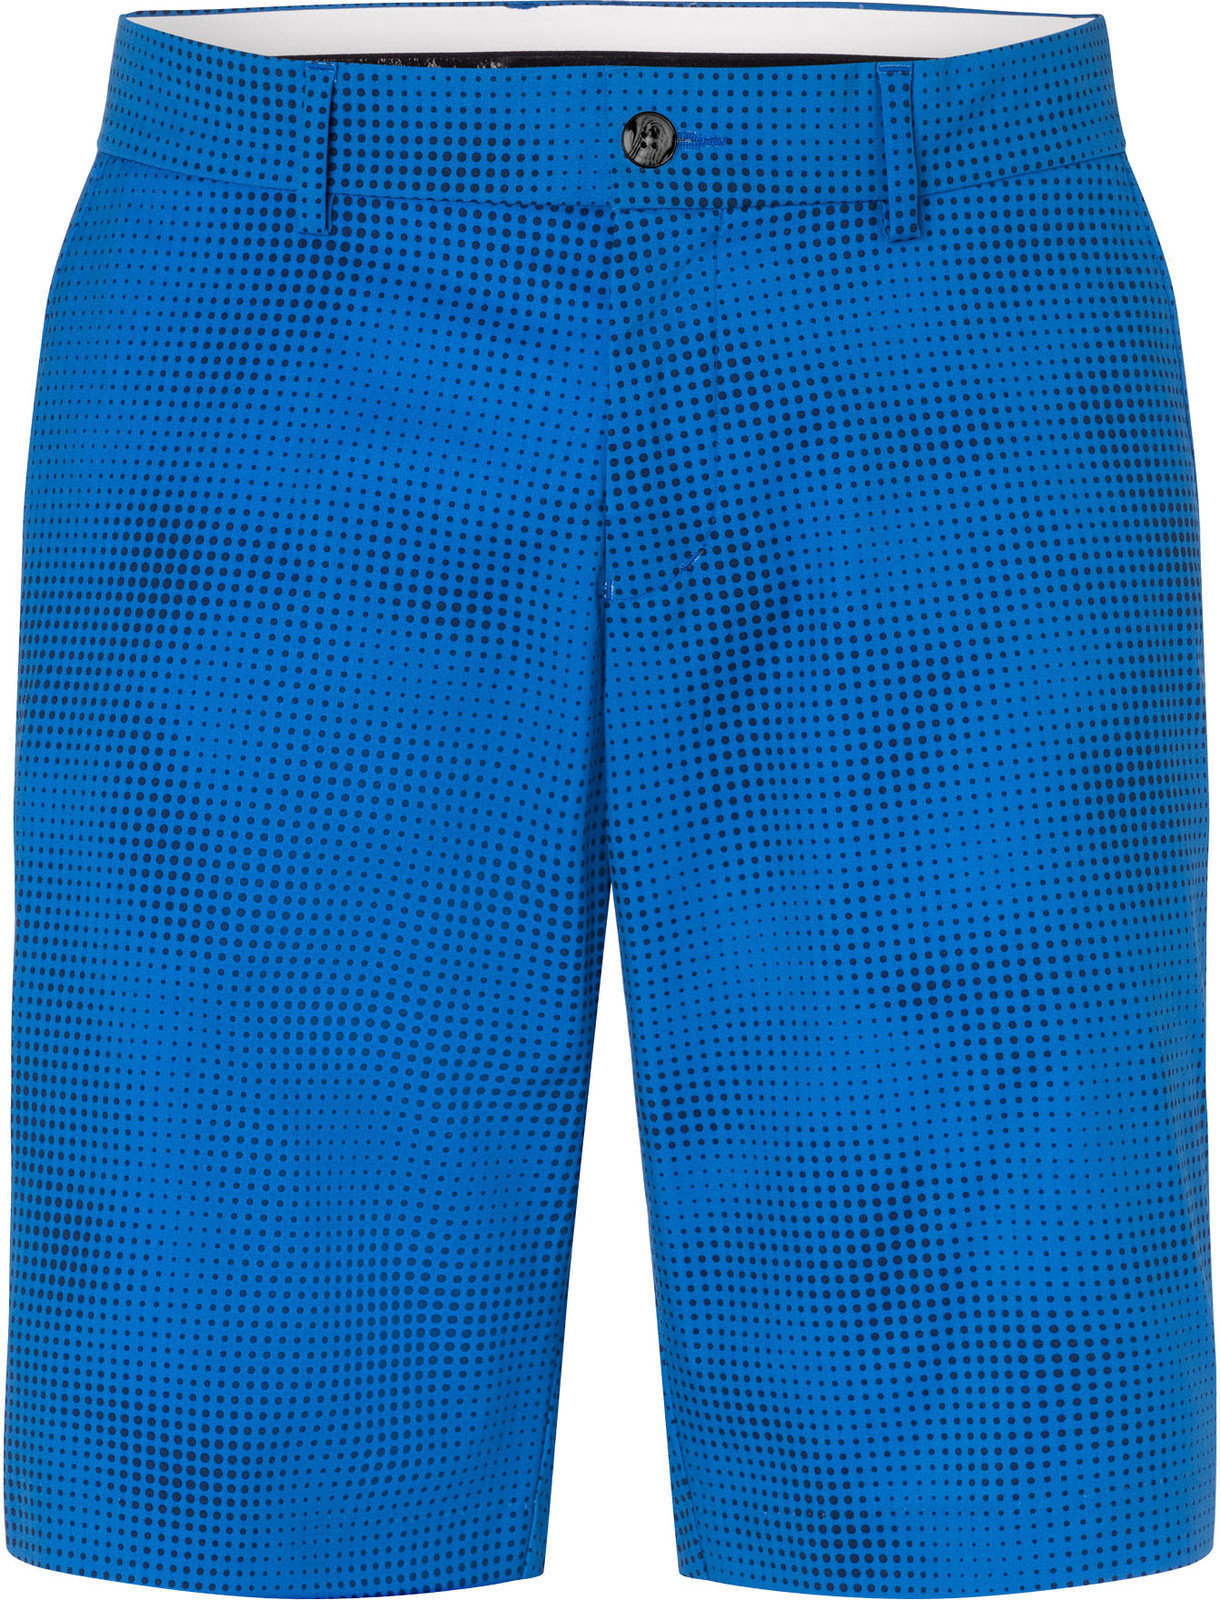 Pantalones cortos Kjus Inaction Pacific Blue 38